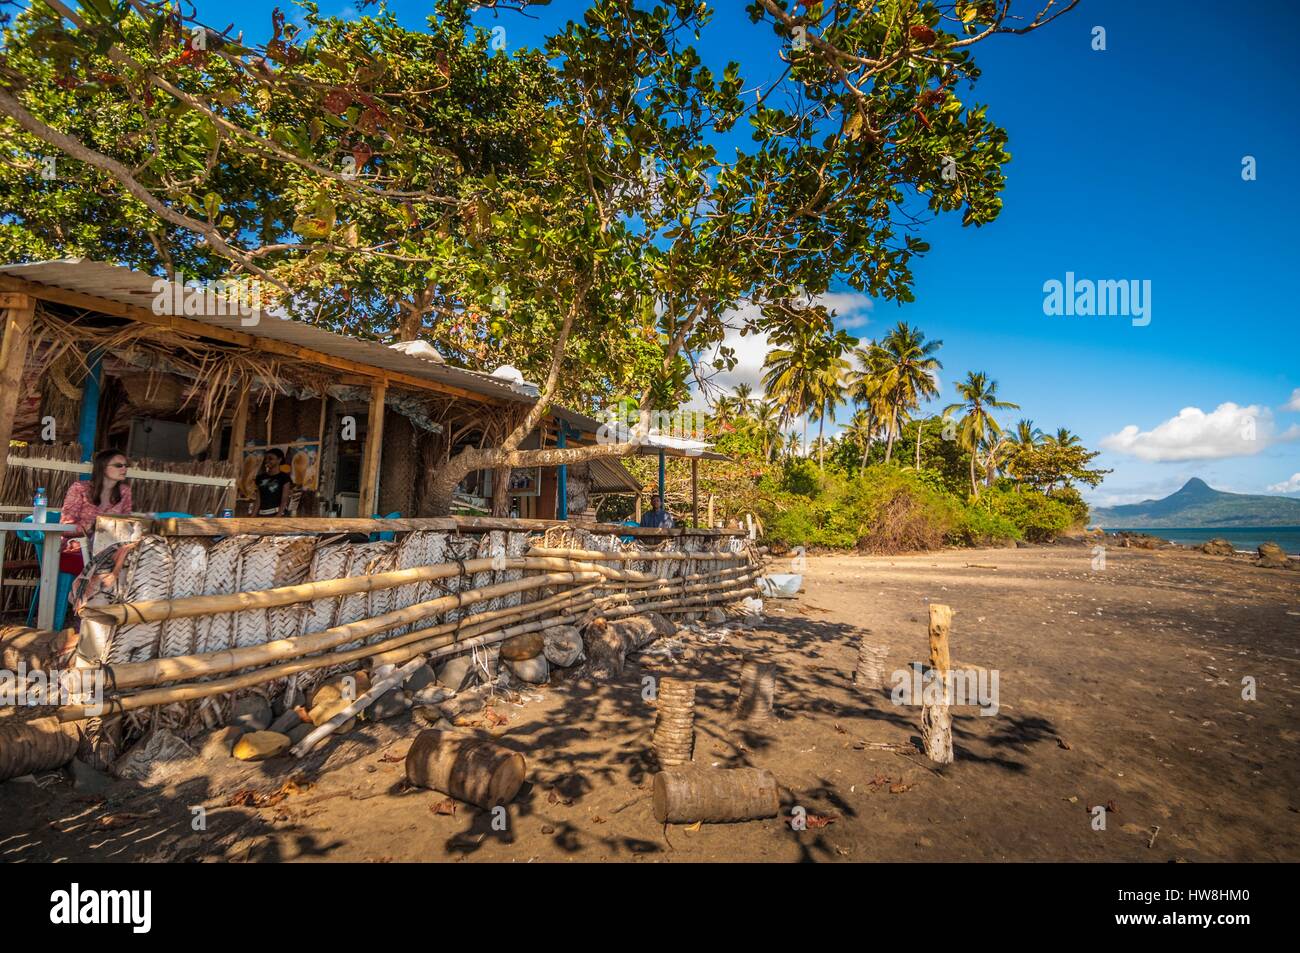 France, Mayotte island (French overseas department), Grande Terre, Mayotte Restaurant Tahiti Beach, Mount Choungui background Stock Photo